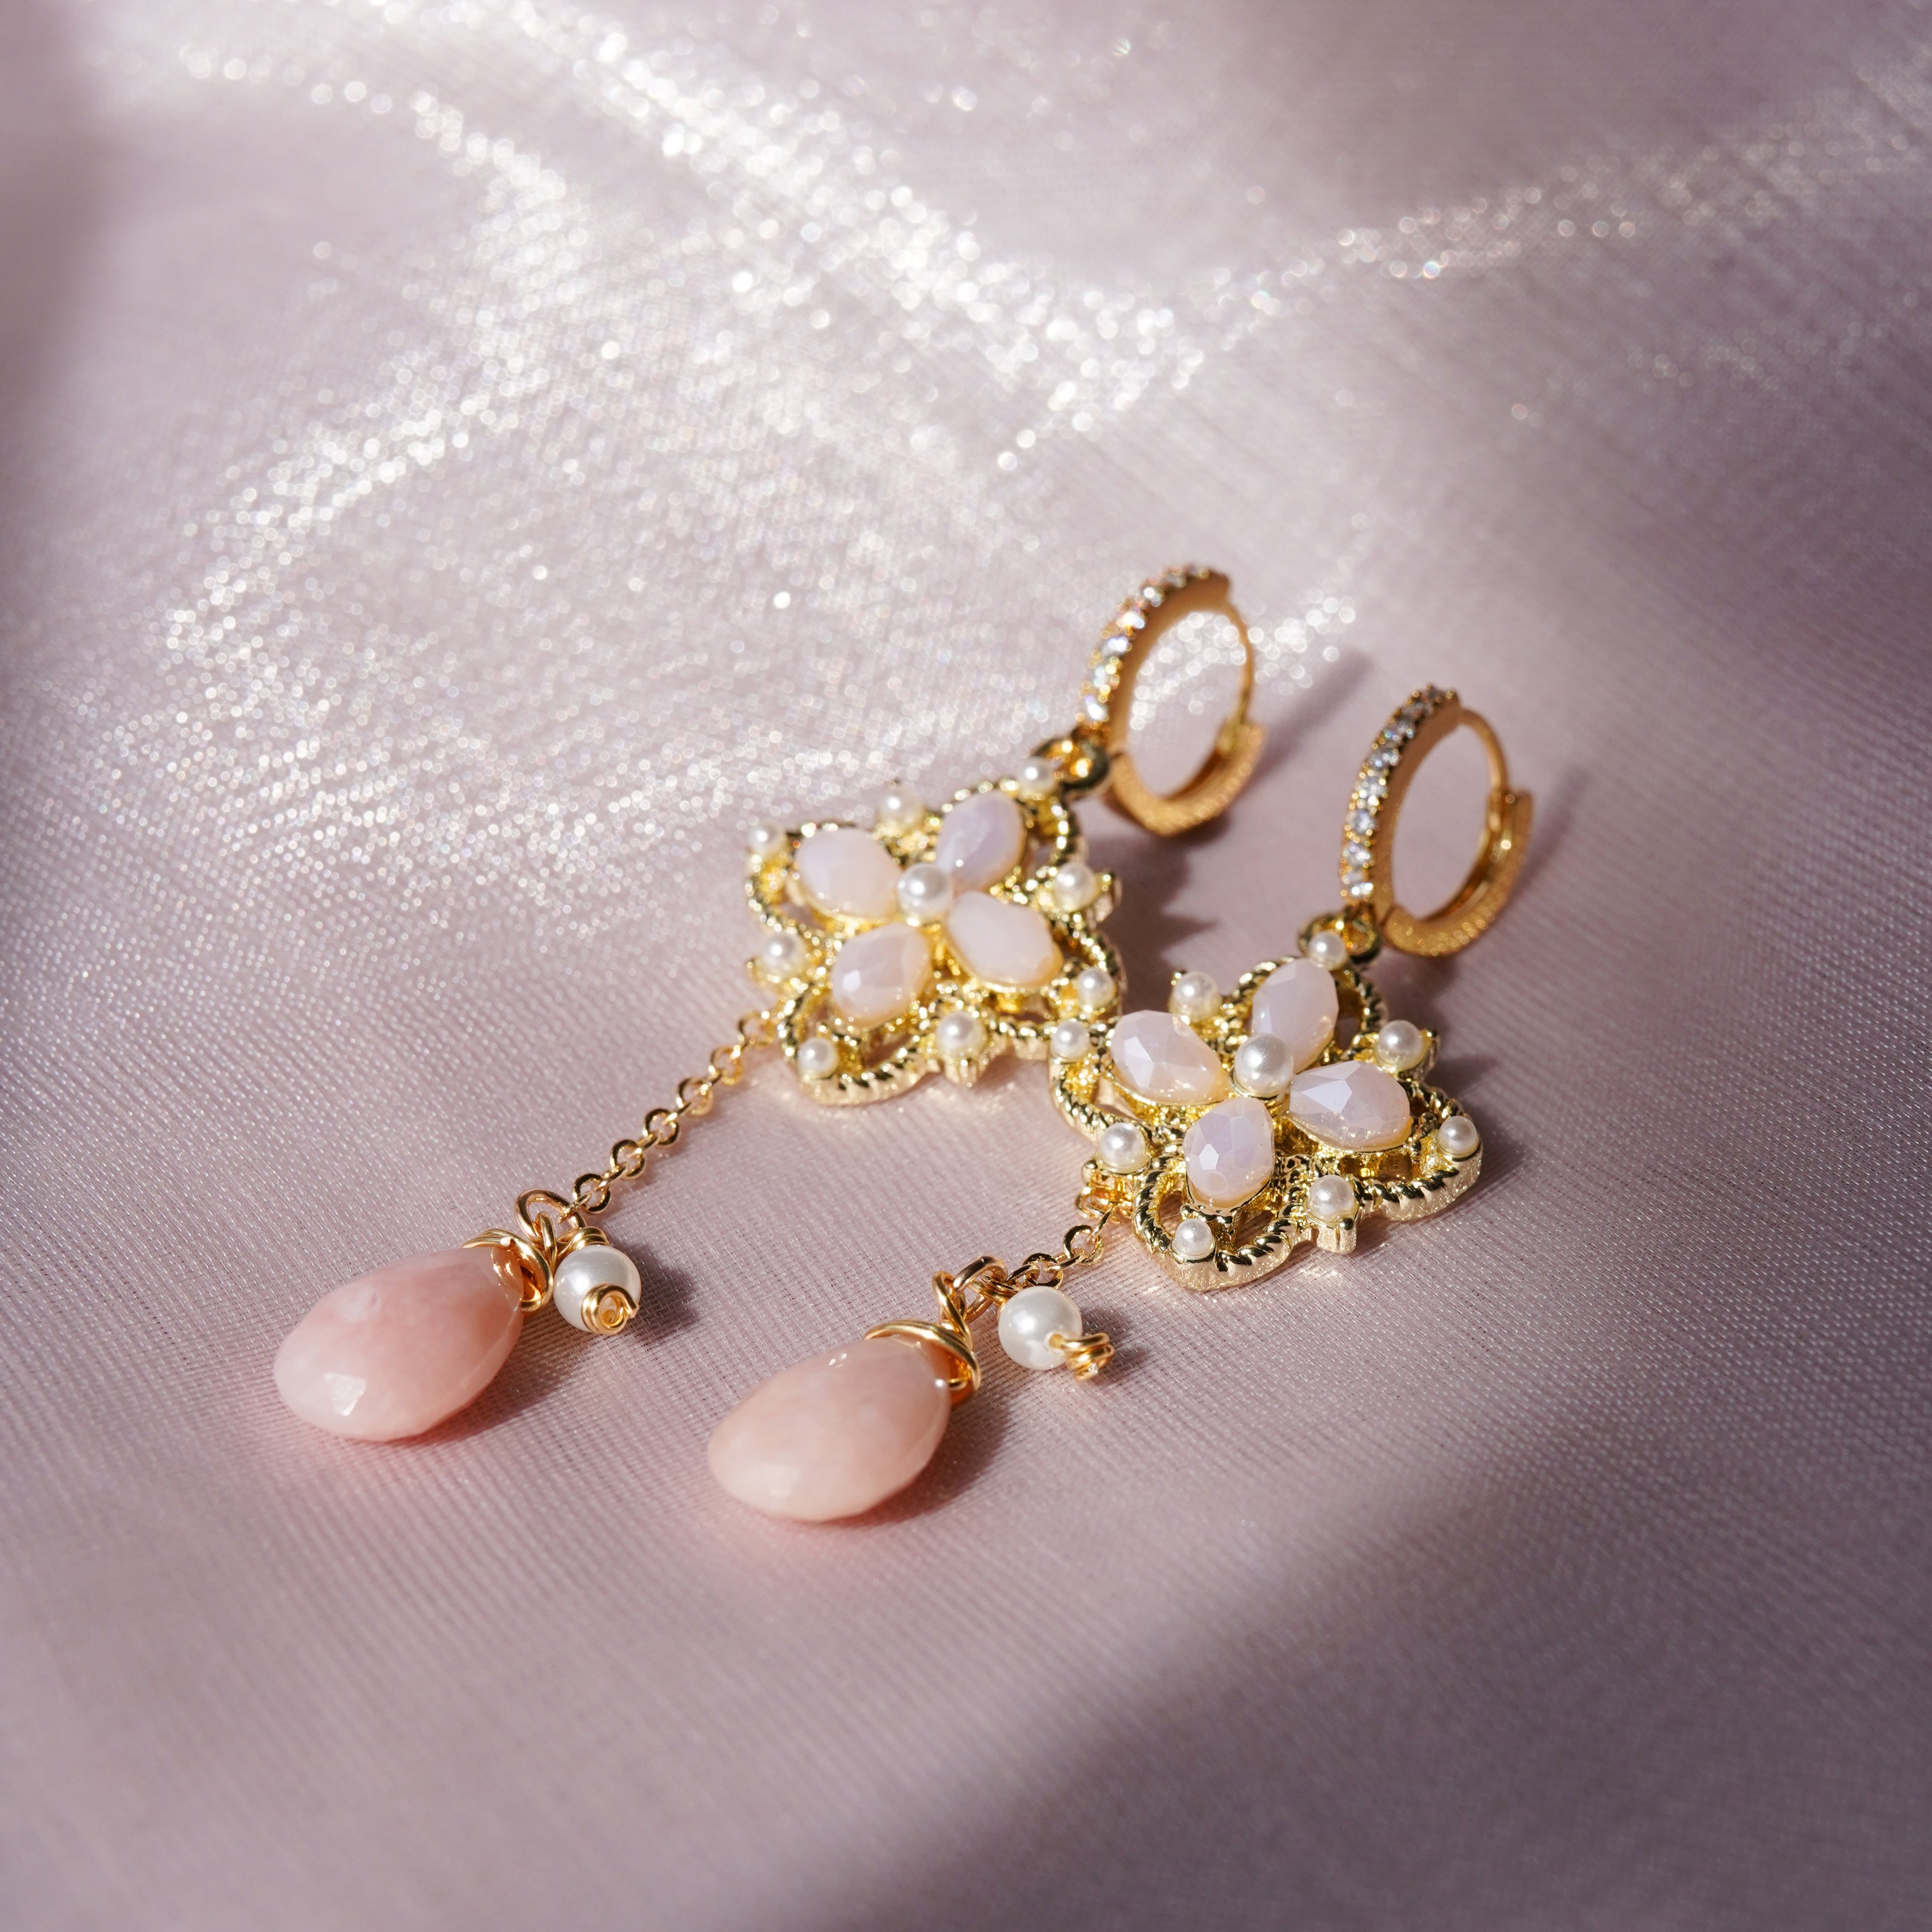 Earrings: Enchanted